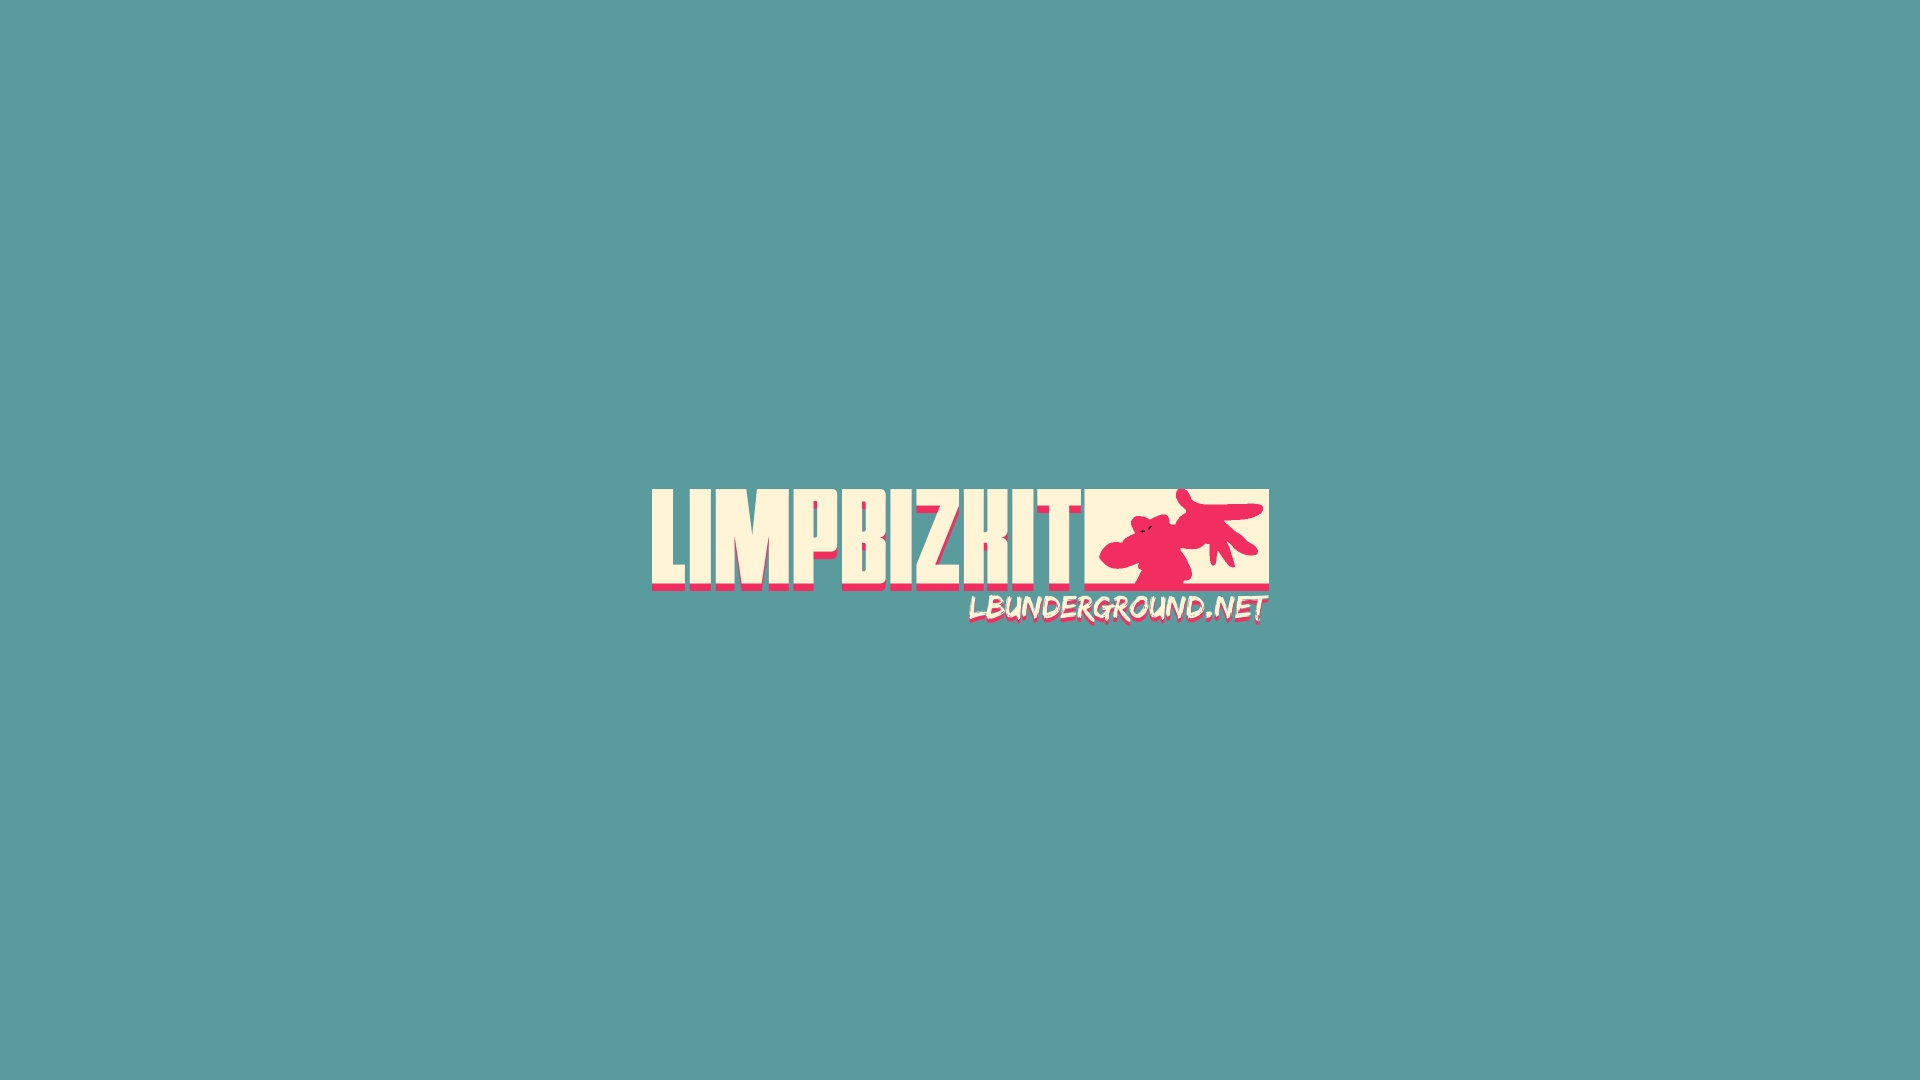 Limp Bizkit Lbunderground Wallpaper HD By